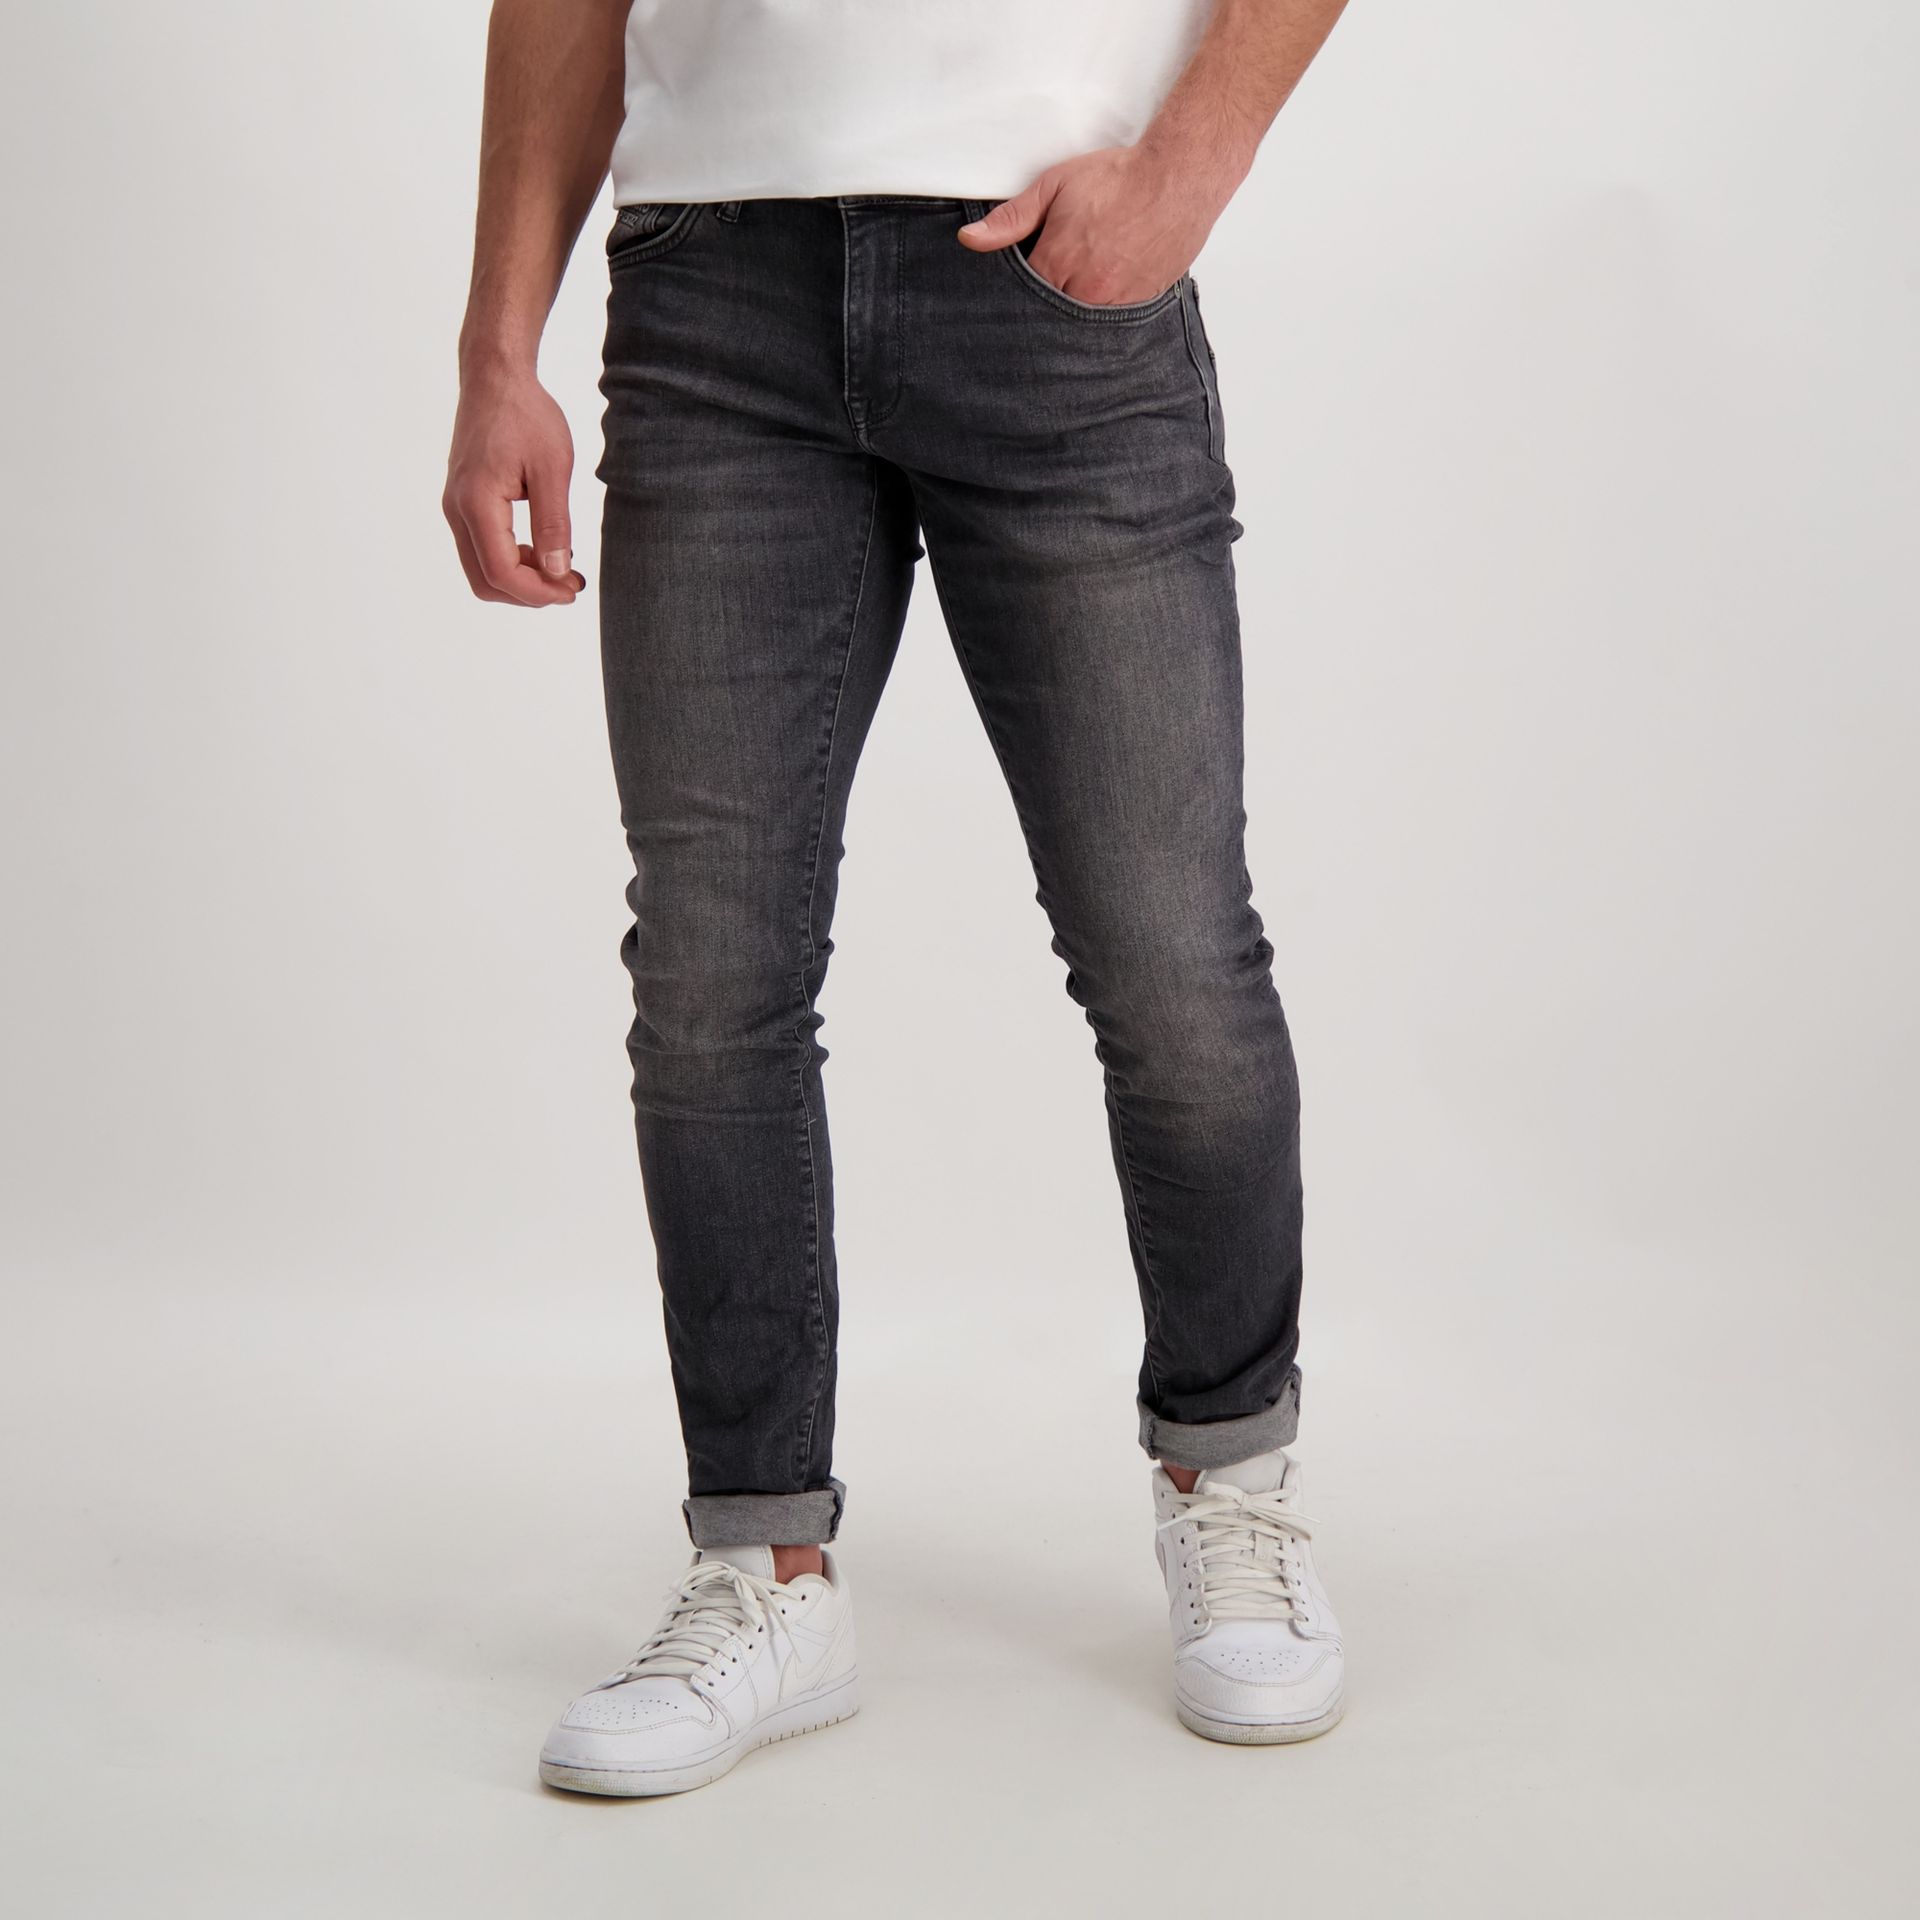 Cars jeans Jeans Bates Slim fit 41 black used 00102503-EKA03000200000011